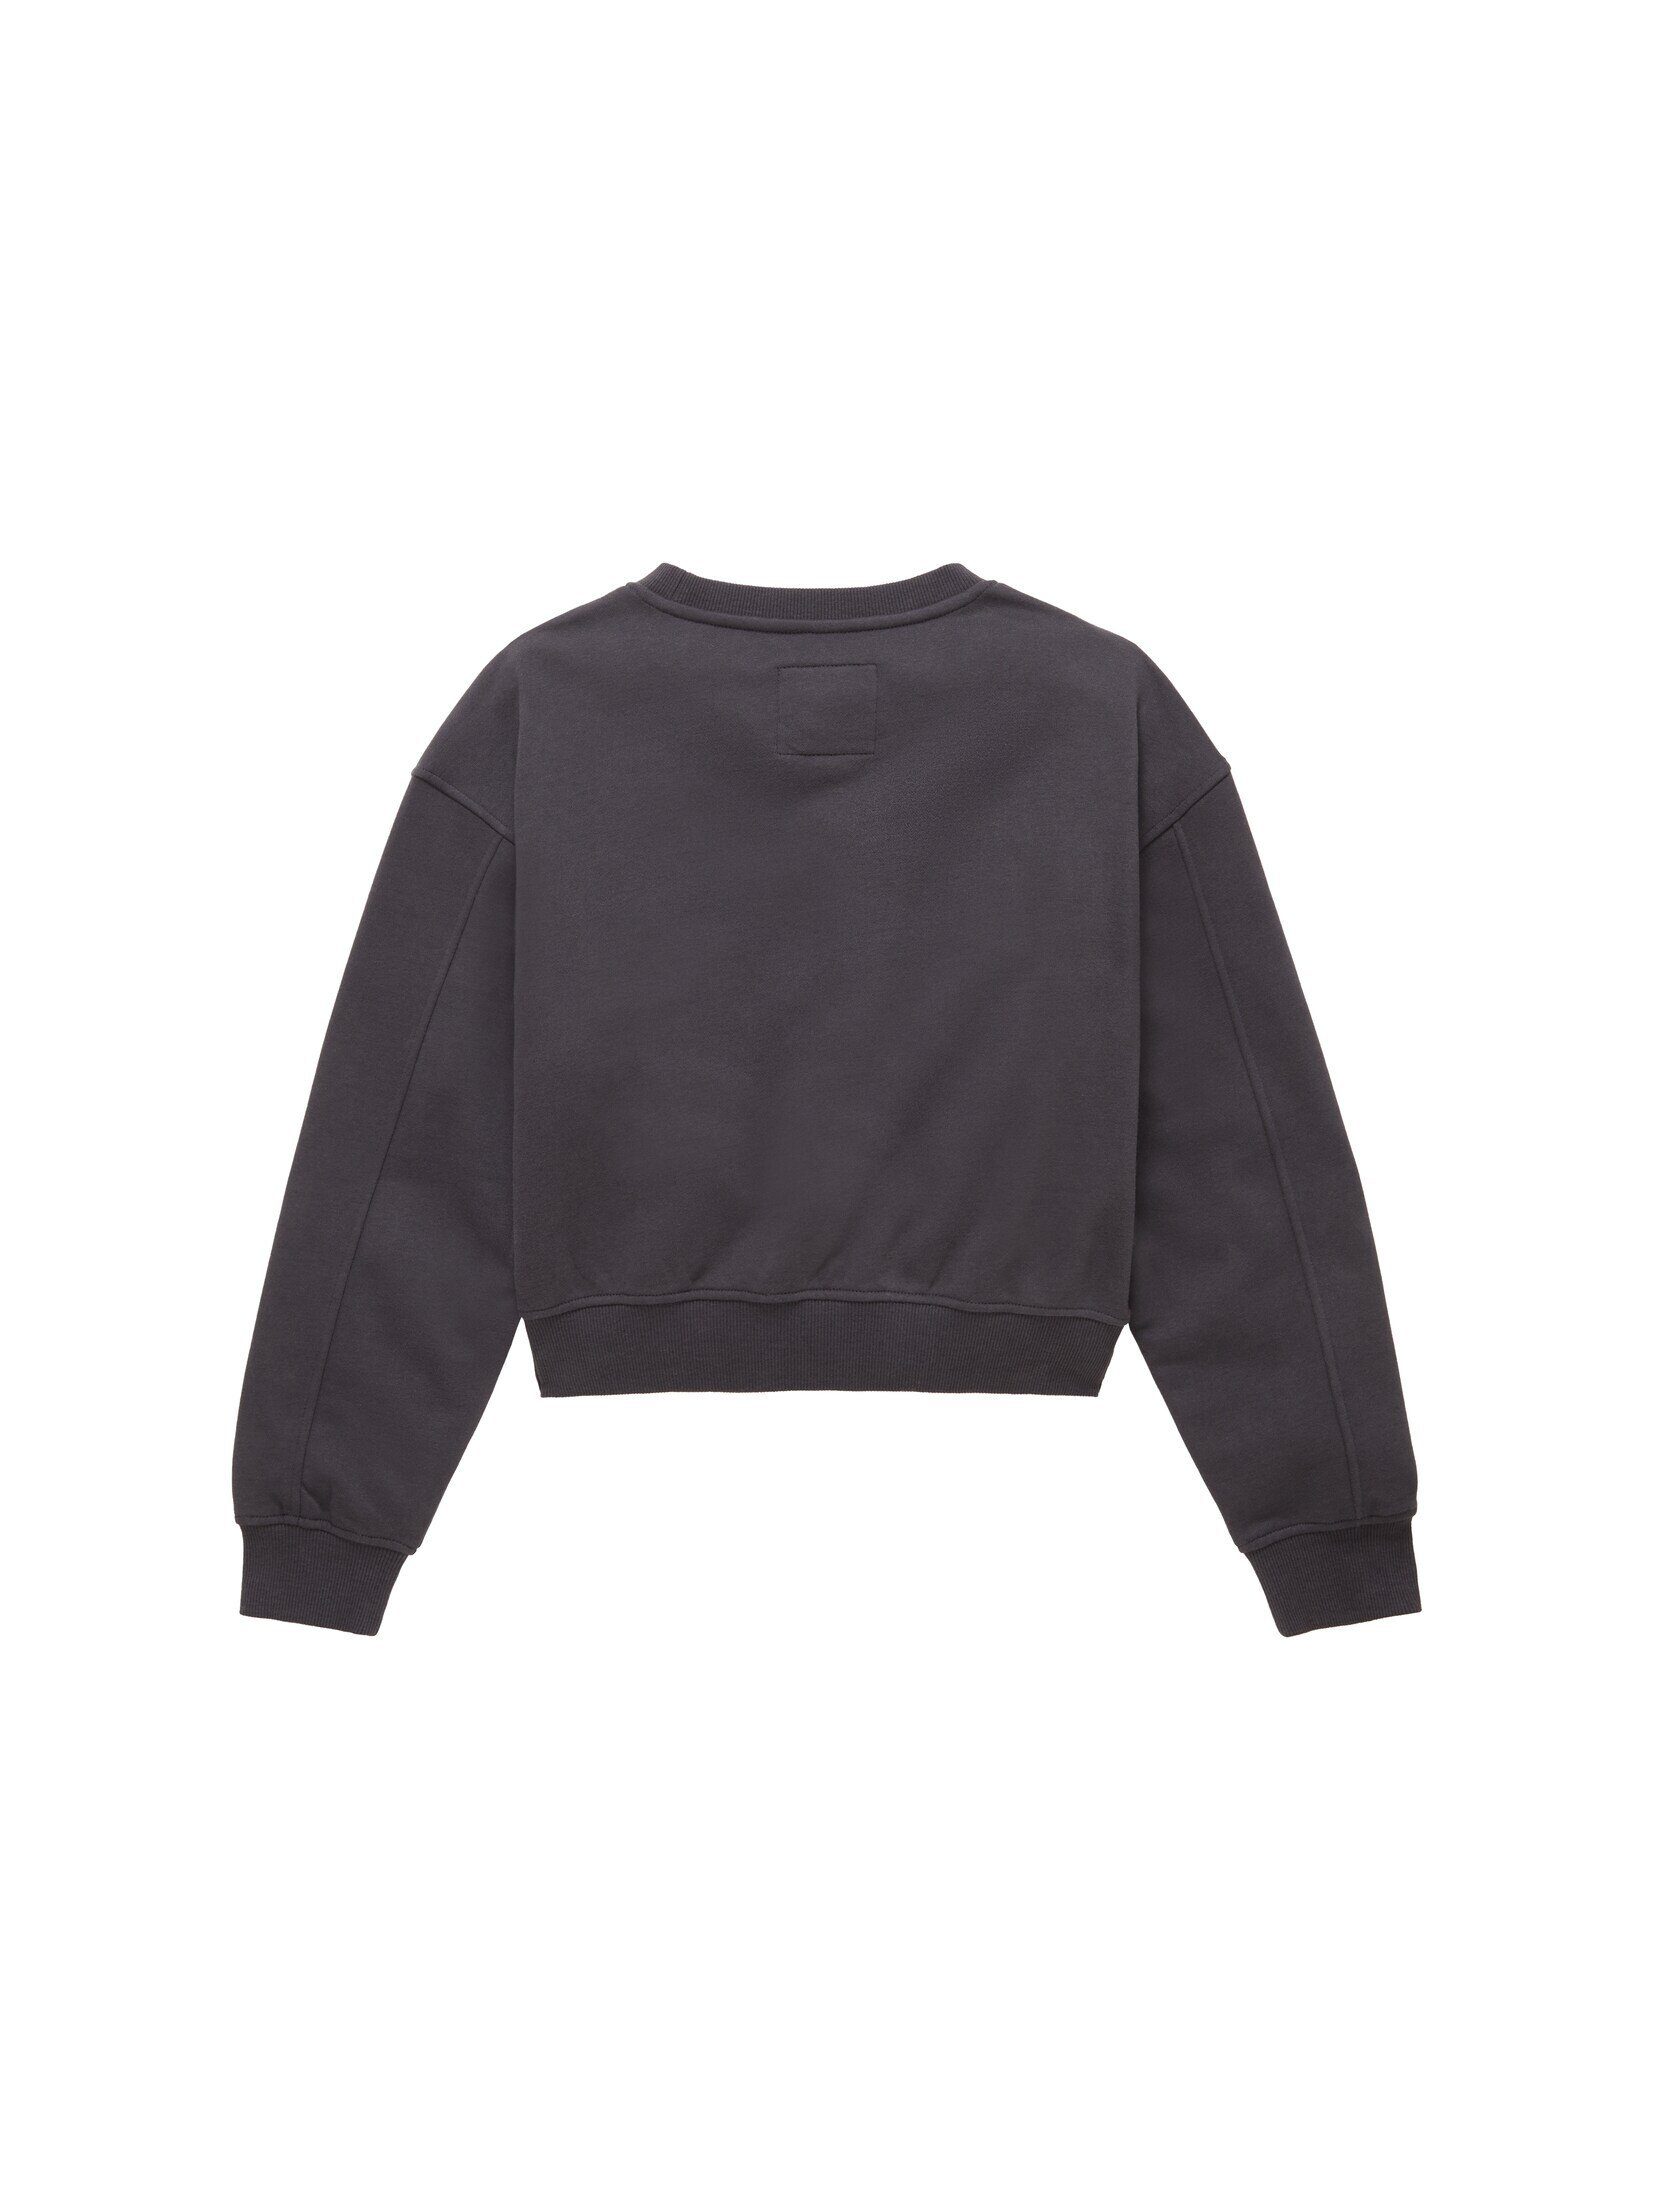 TOM TAILOR Sweatjacke Cropped coal grey Sweatshirt